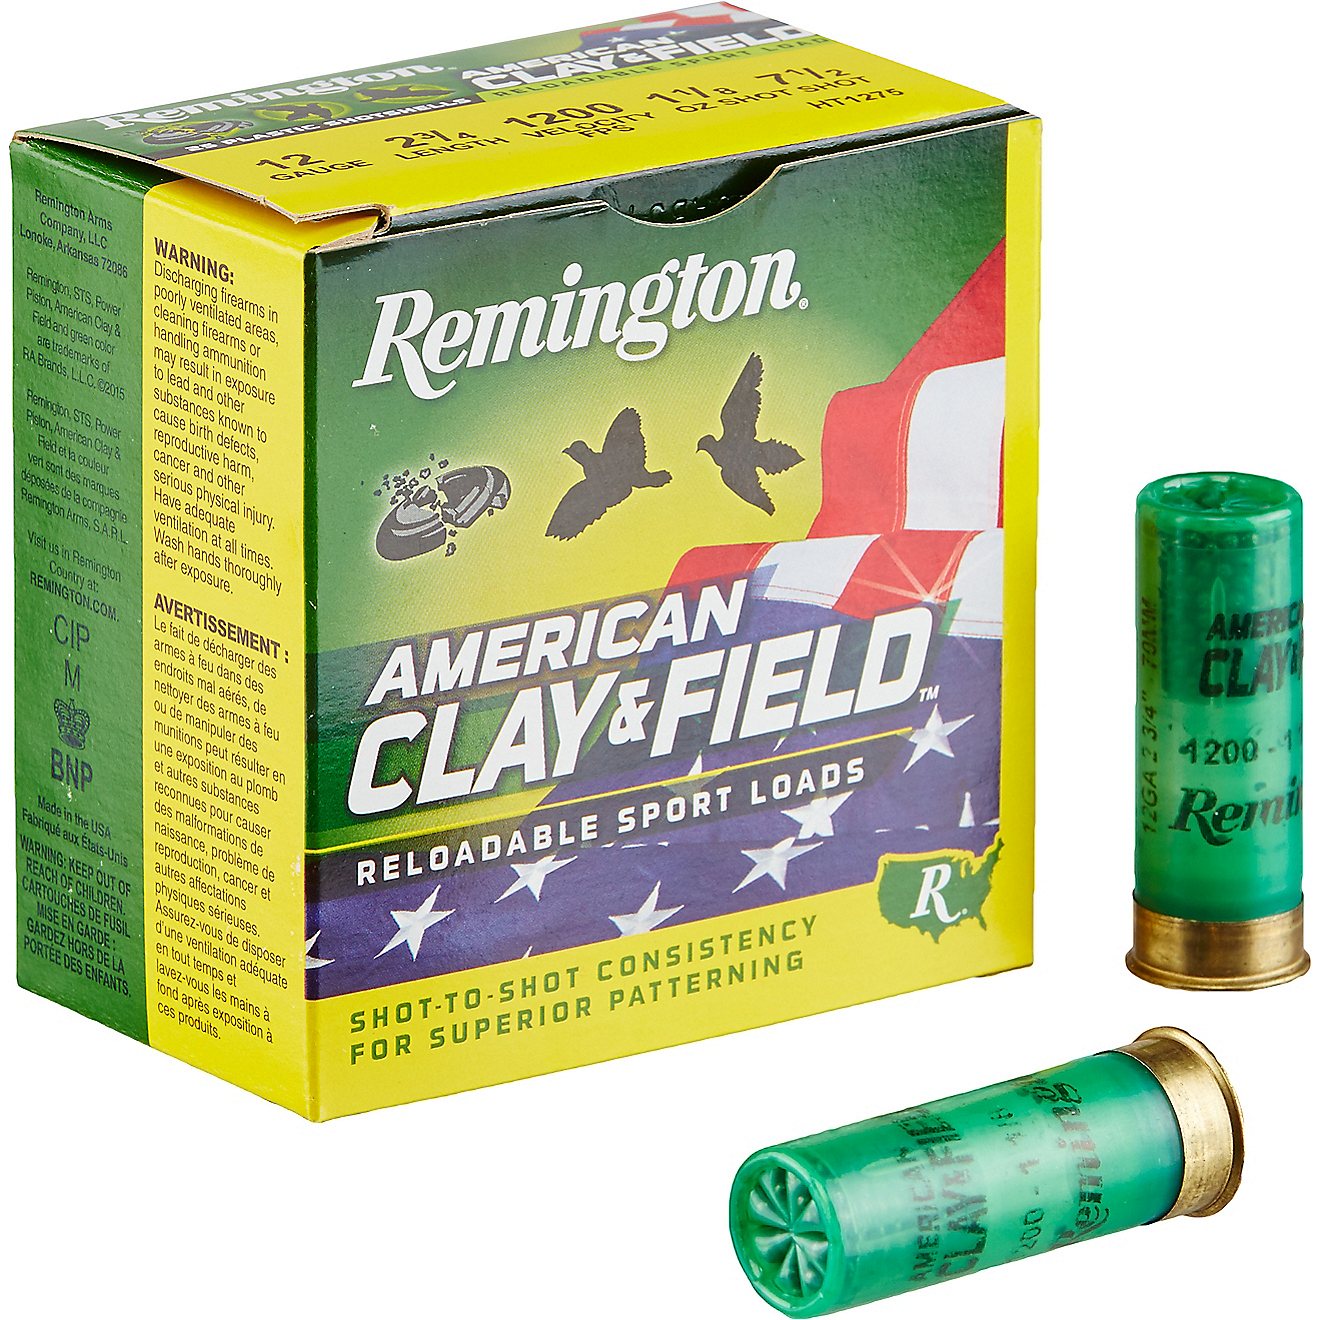 Remington American Clay & Field 12 Gauge Reloadable Sport Loads                                                                  - view number 1